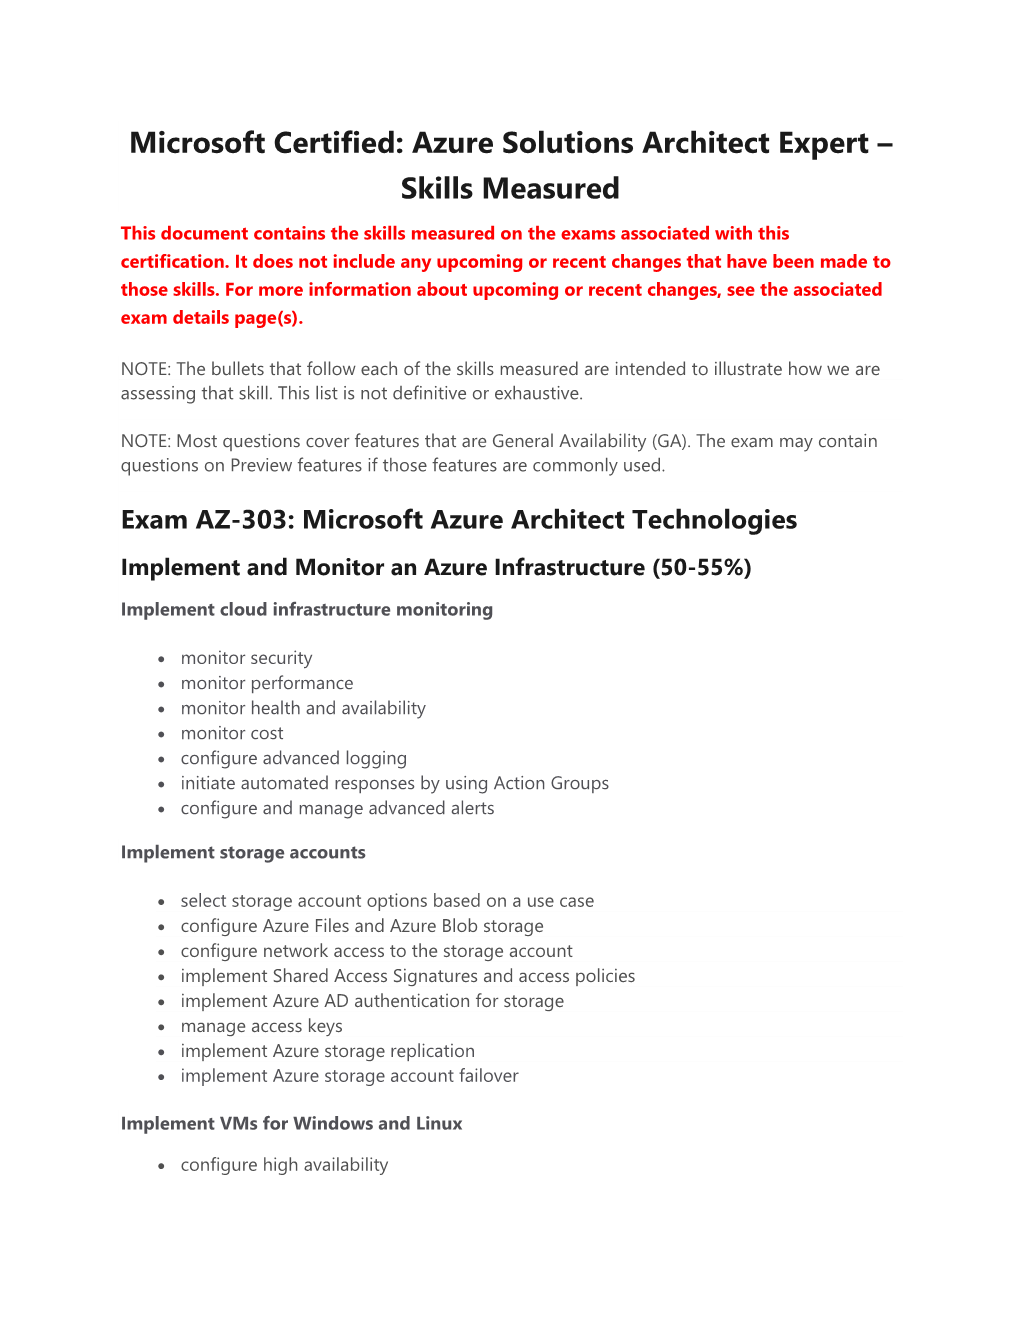 Microsoft Certified: Azure Solutions Architect Expert – Skills Measured